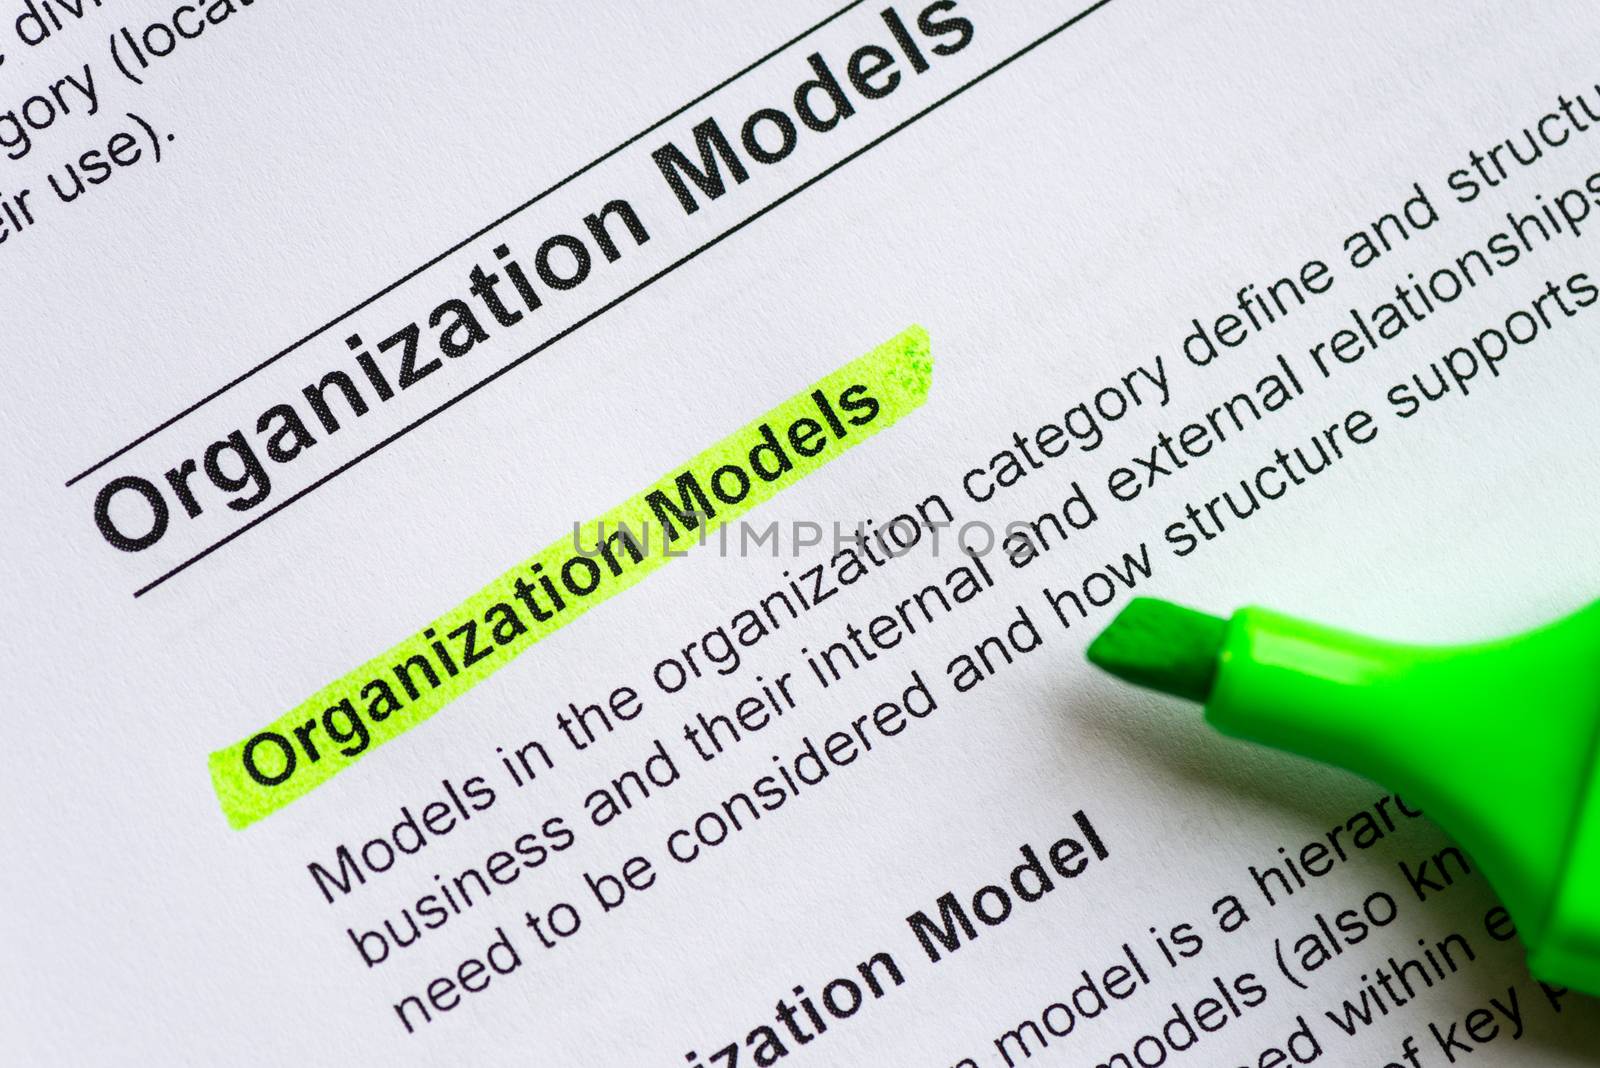 organization models by sohel.parvez@hotmail.com